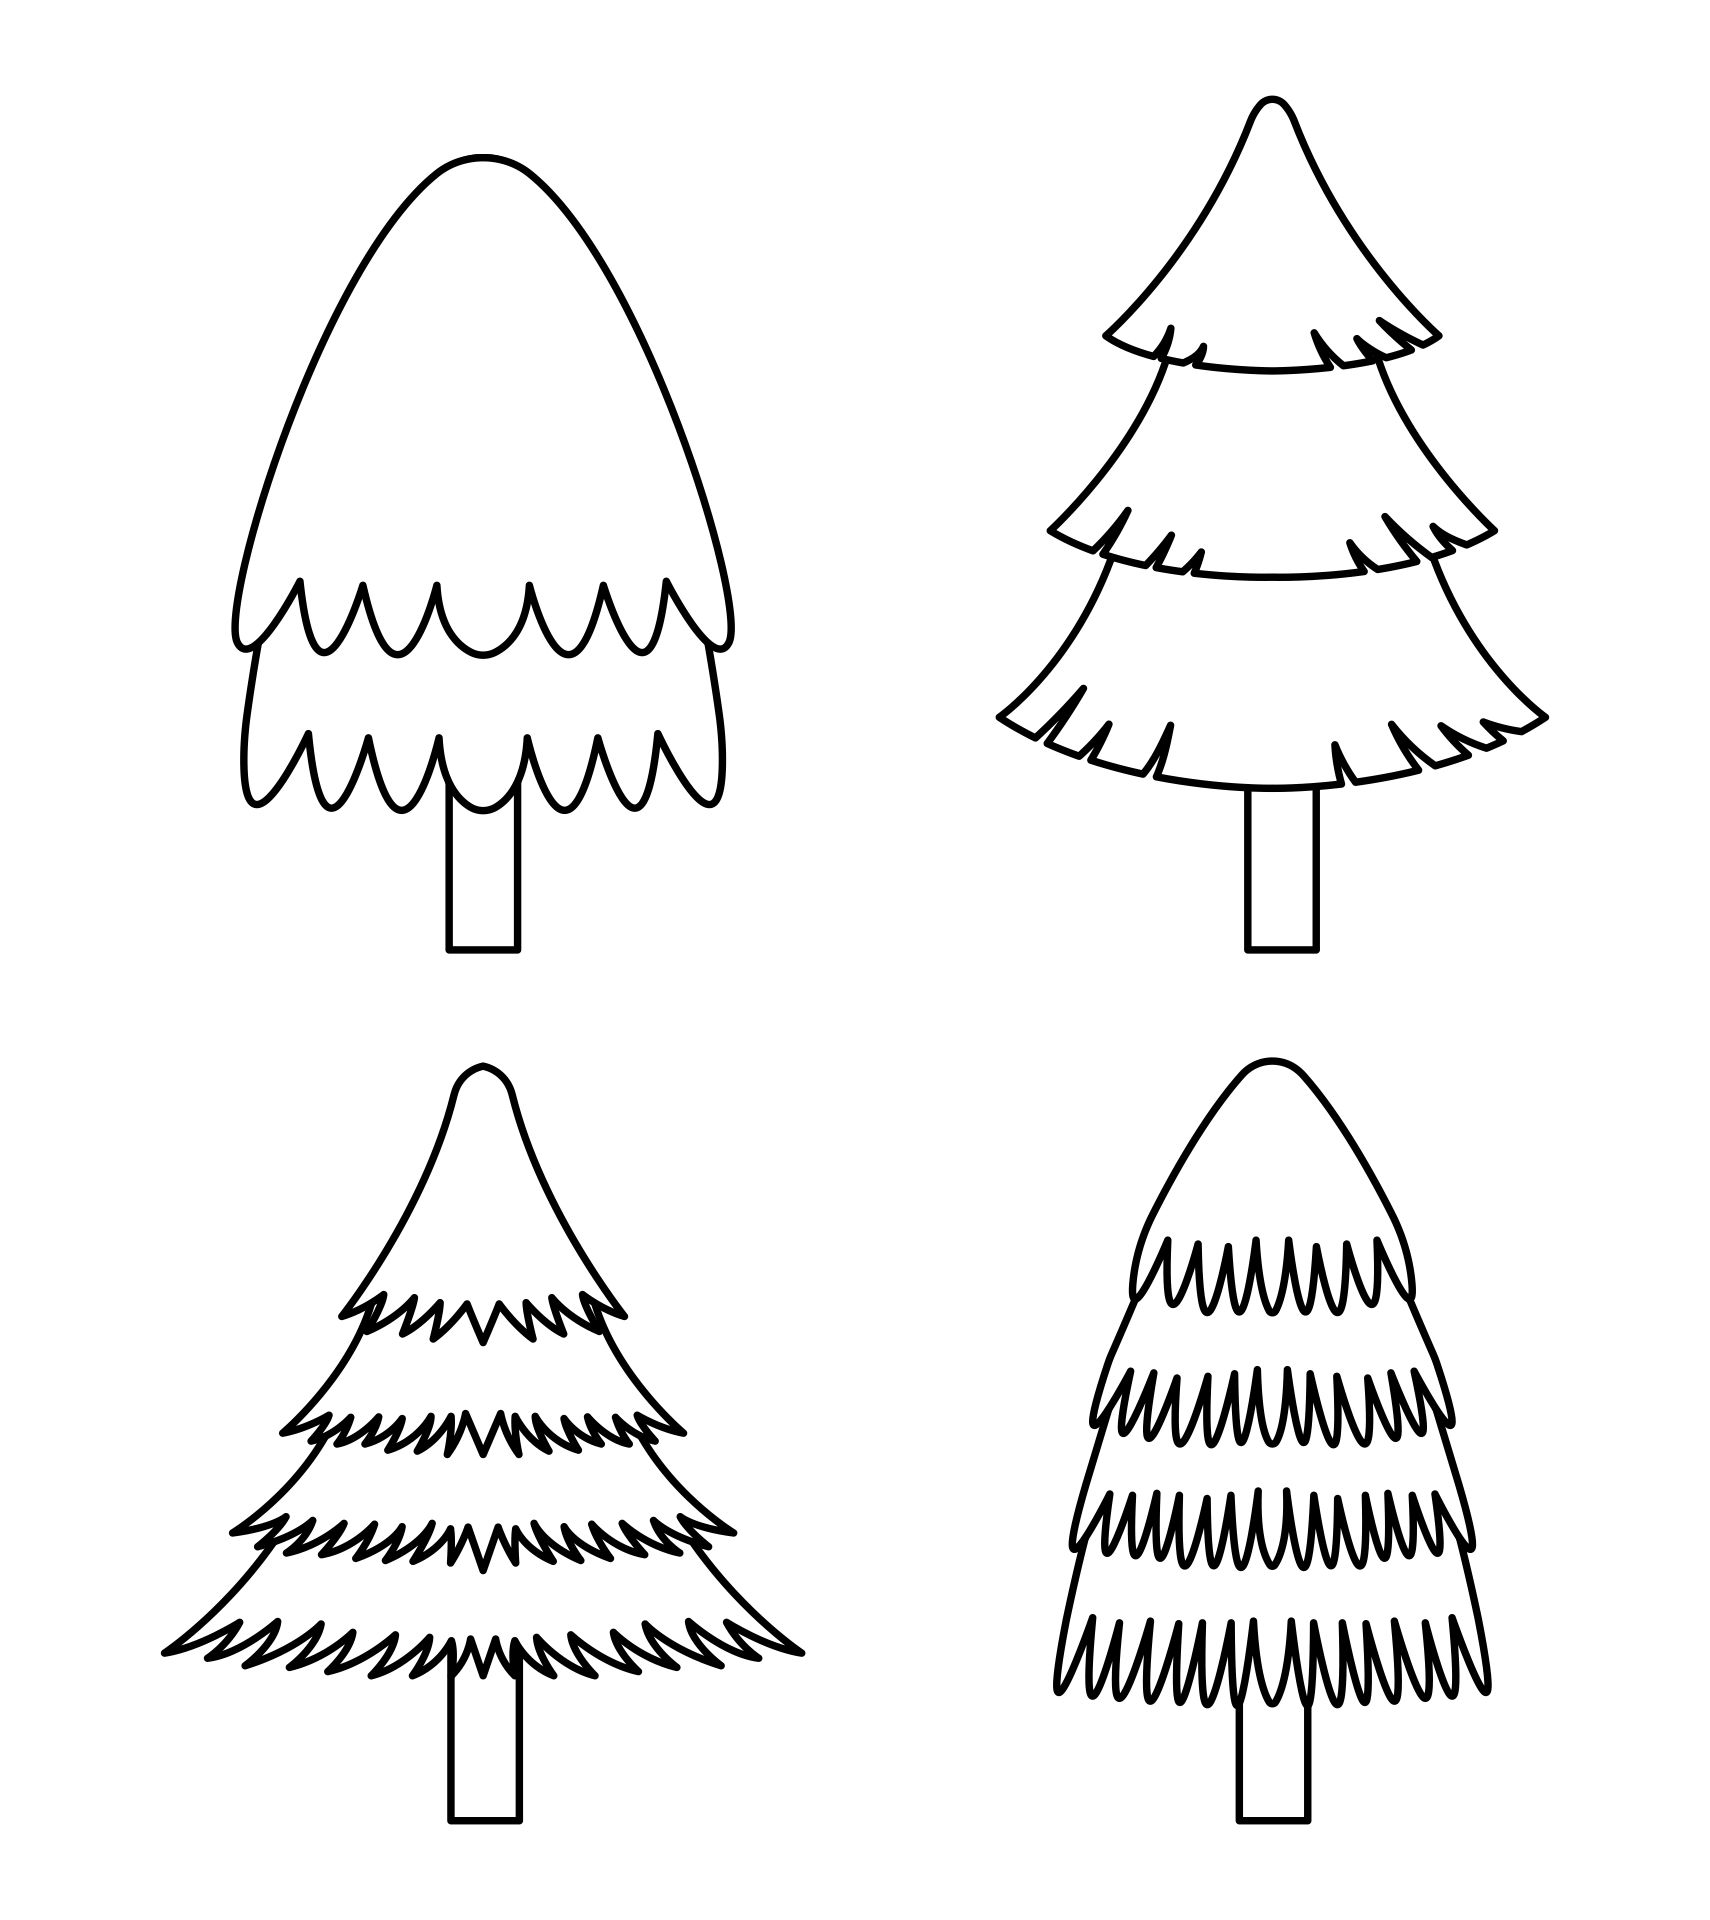 Printable Christmas Tree Template & Stencil Patterns